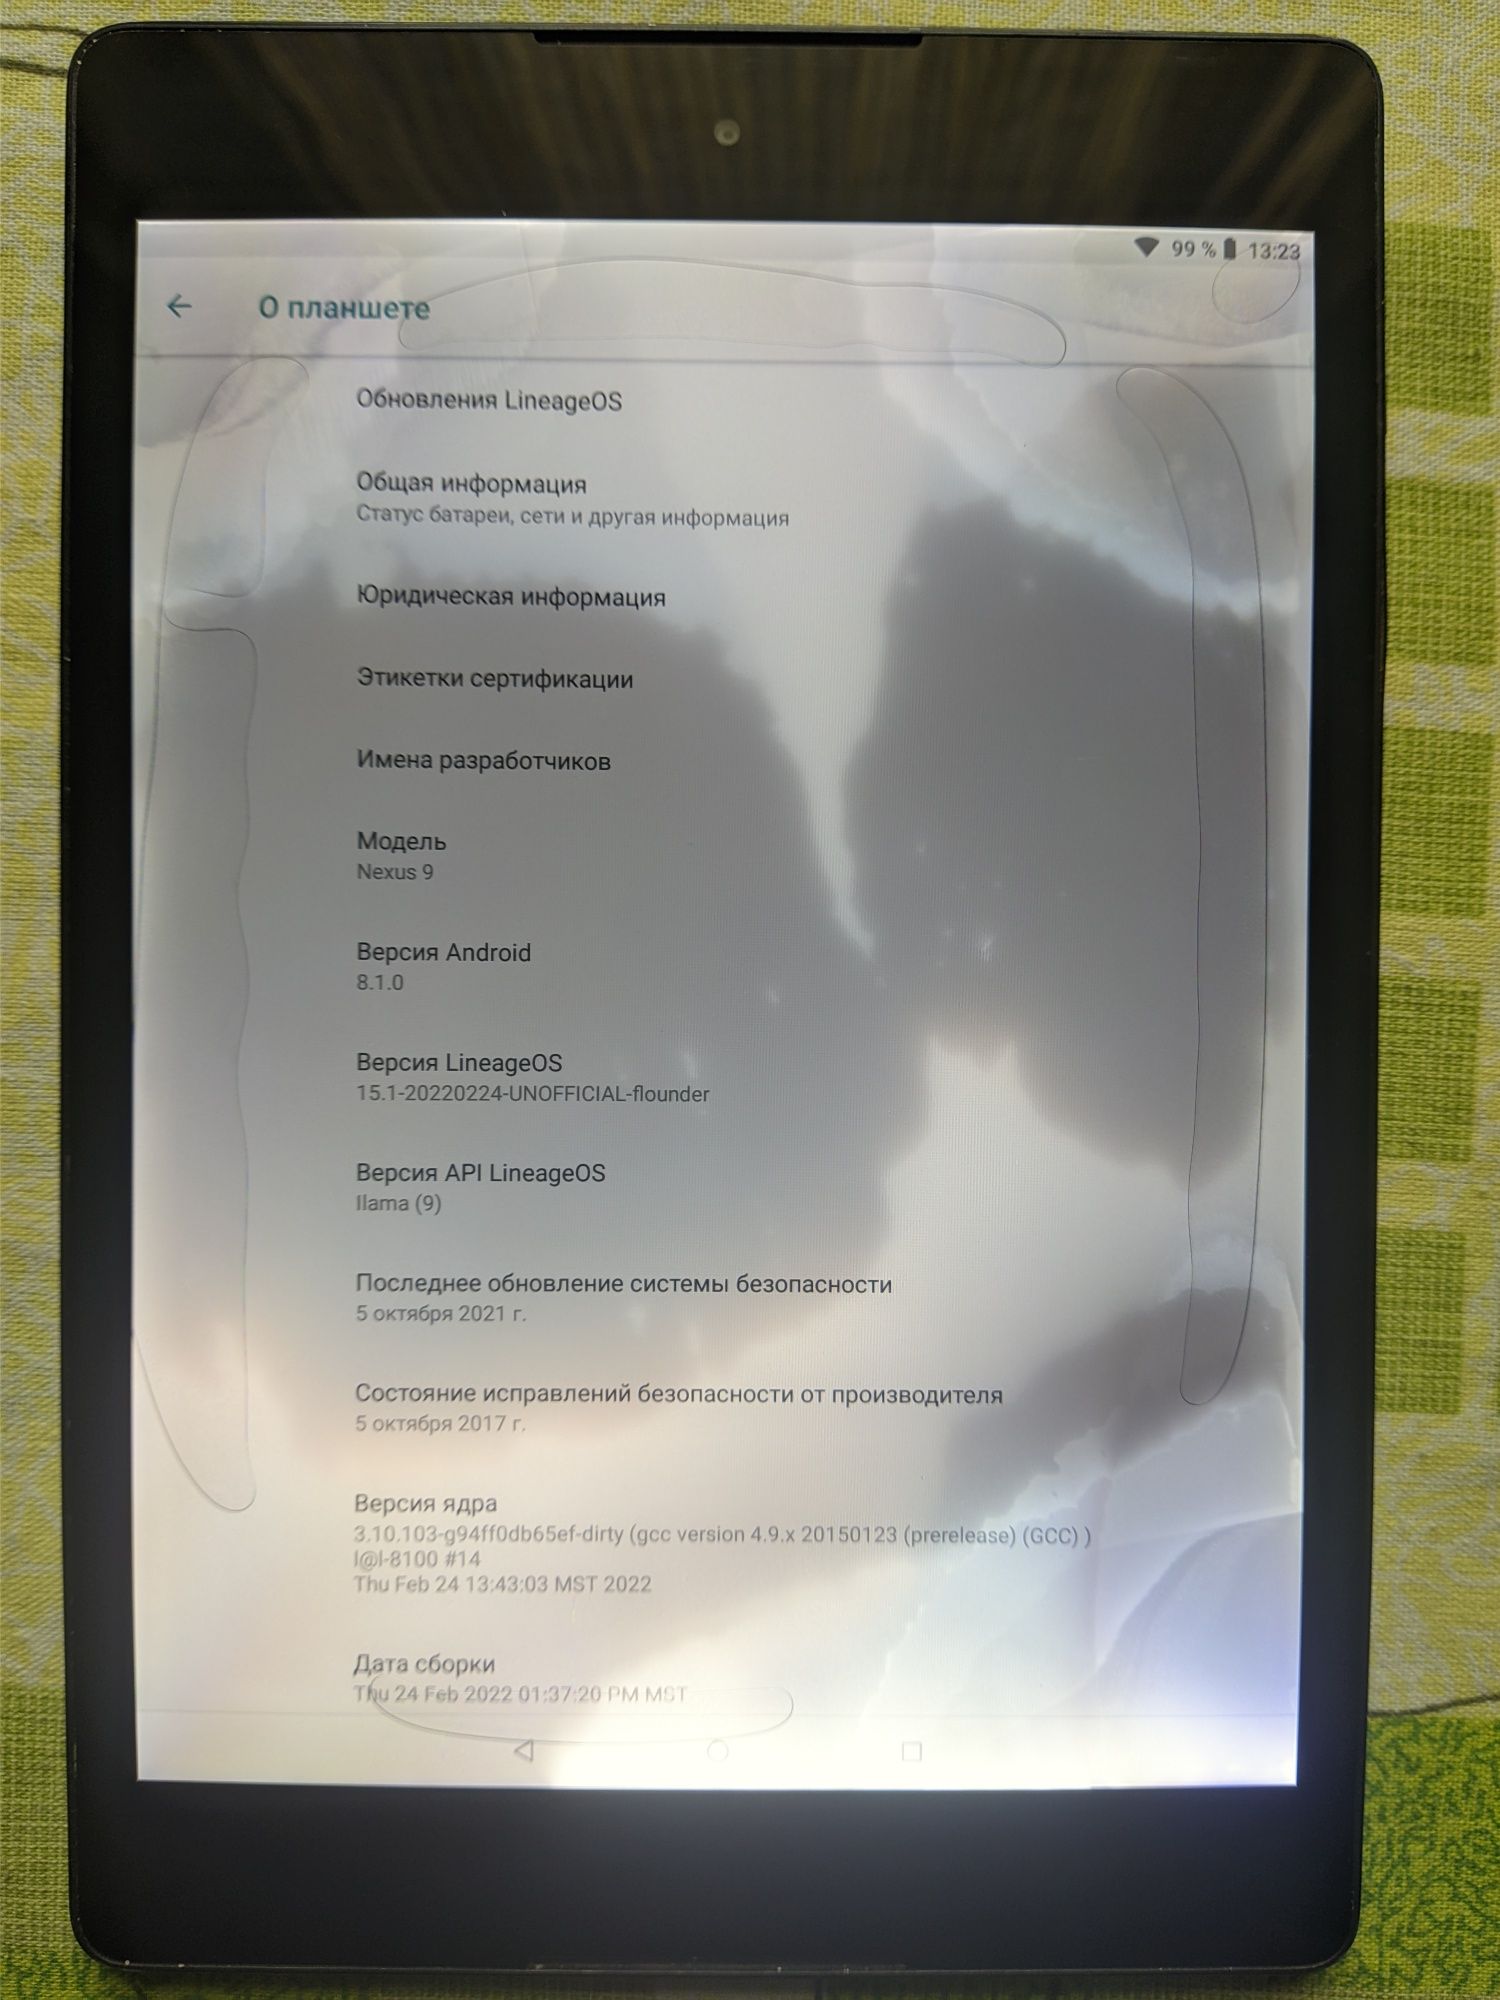 HTS Nexus 9 Wifi 2/16 Android 8.1 Батарея держит отлично